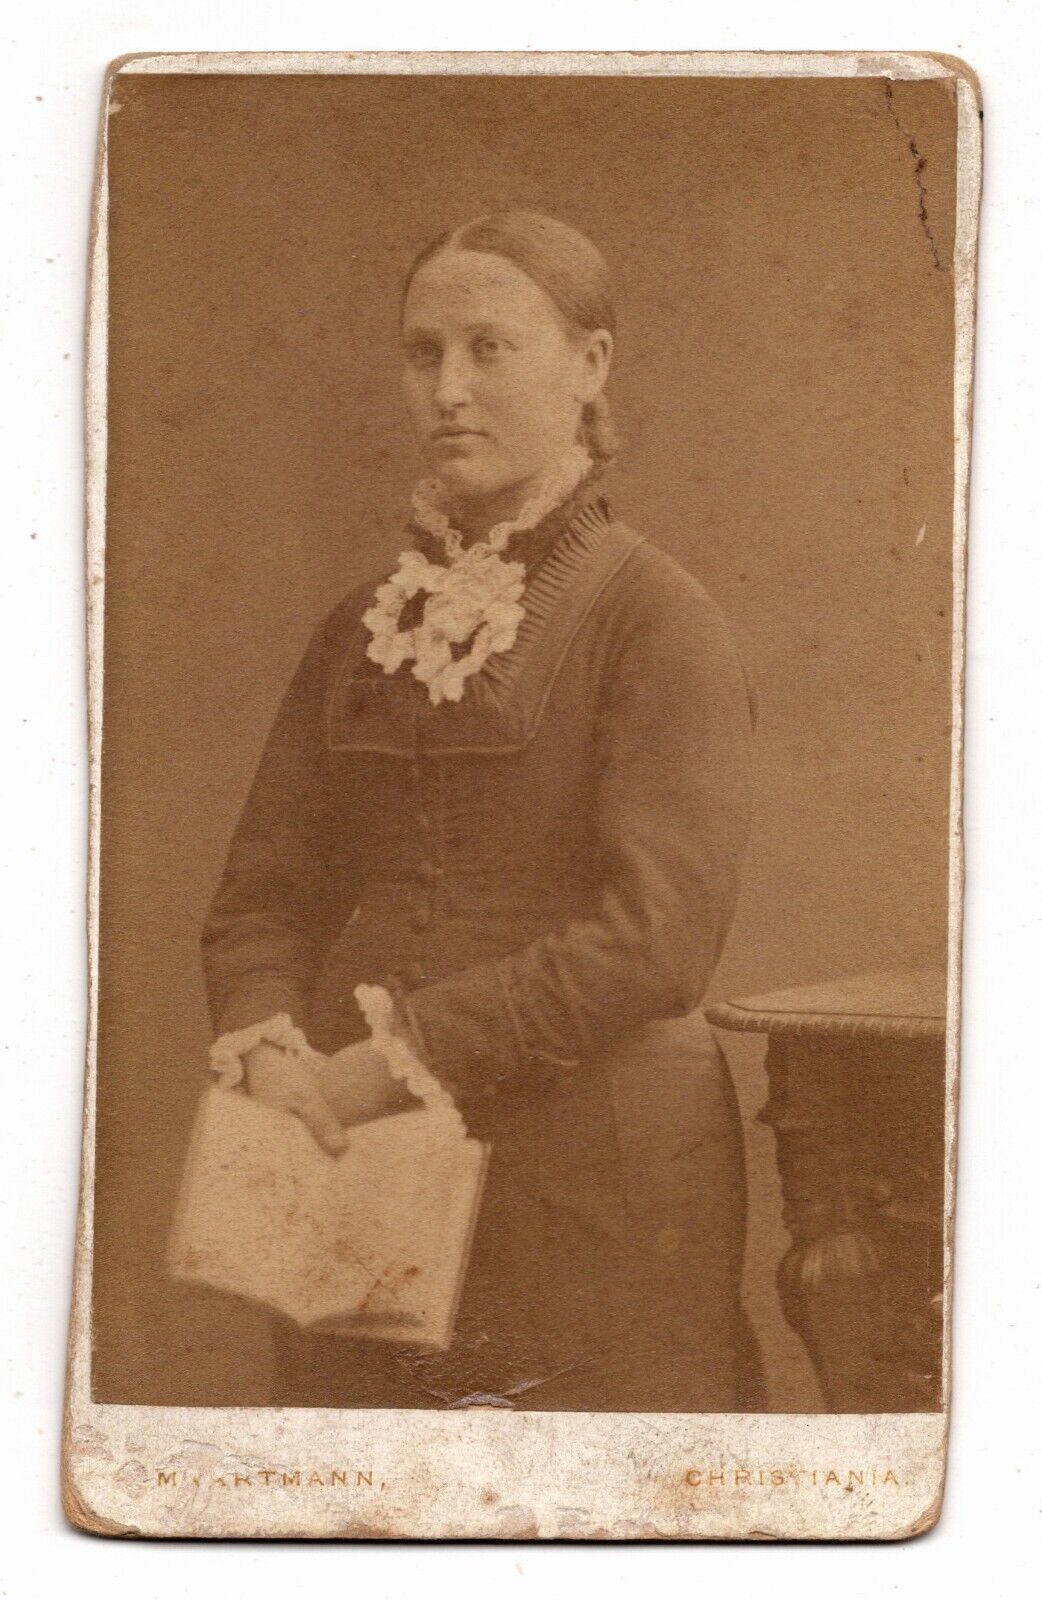 ANTIQUE CDV C. 1880s MAARTMANN YOUNG LADY HOLDING BOOK CHRISTIANIA DENMARK